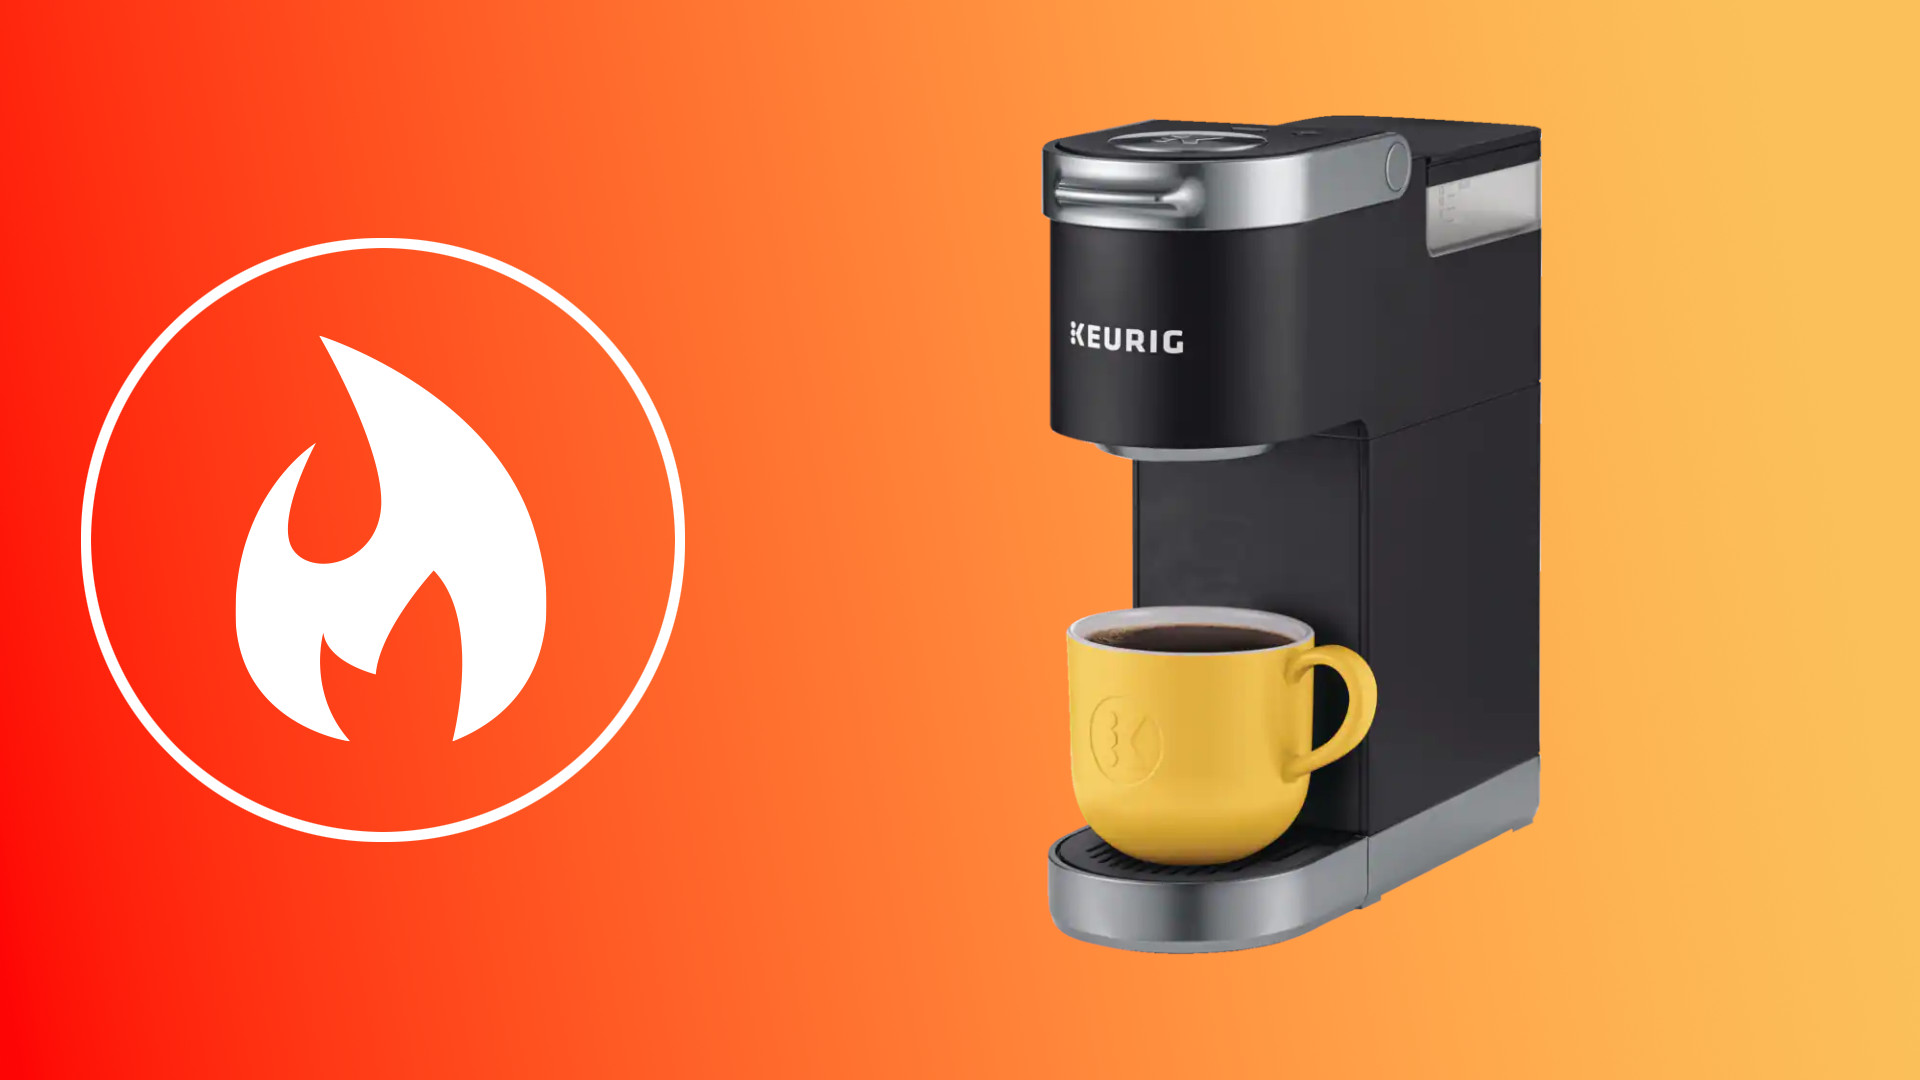 Keurig K-Mini coffee maker on orange background with fire symbol